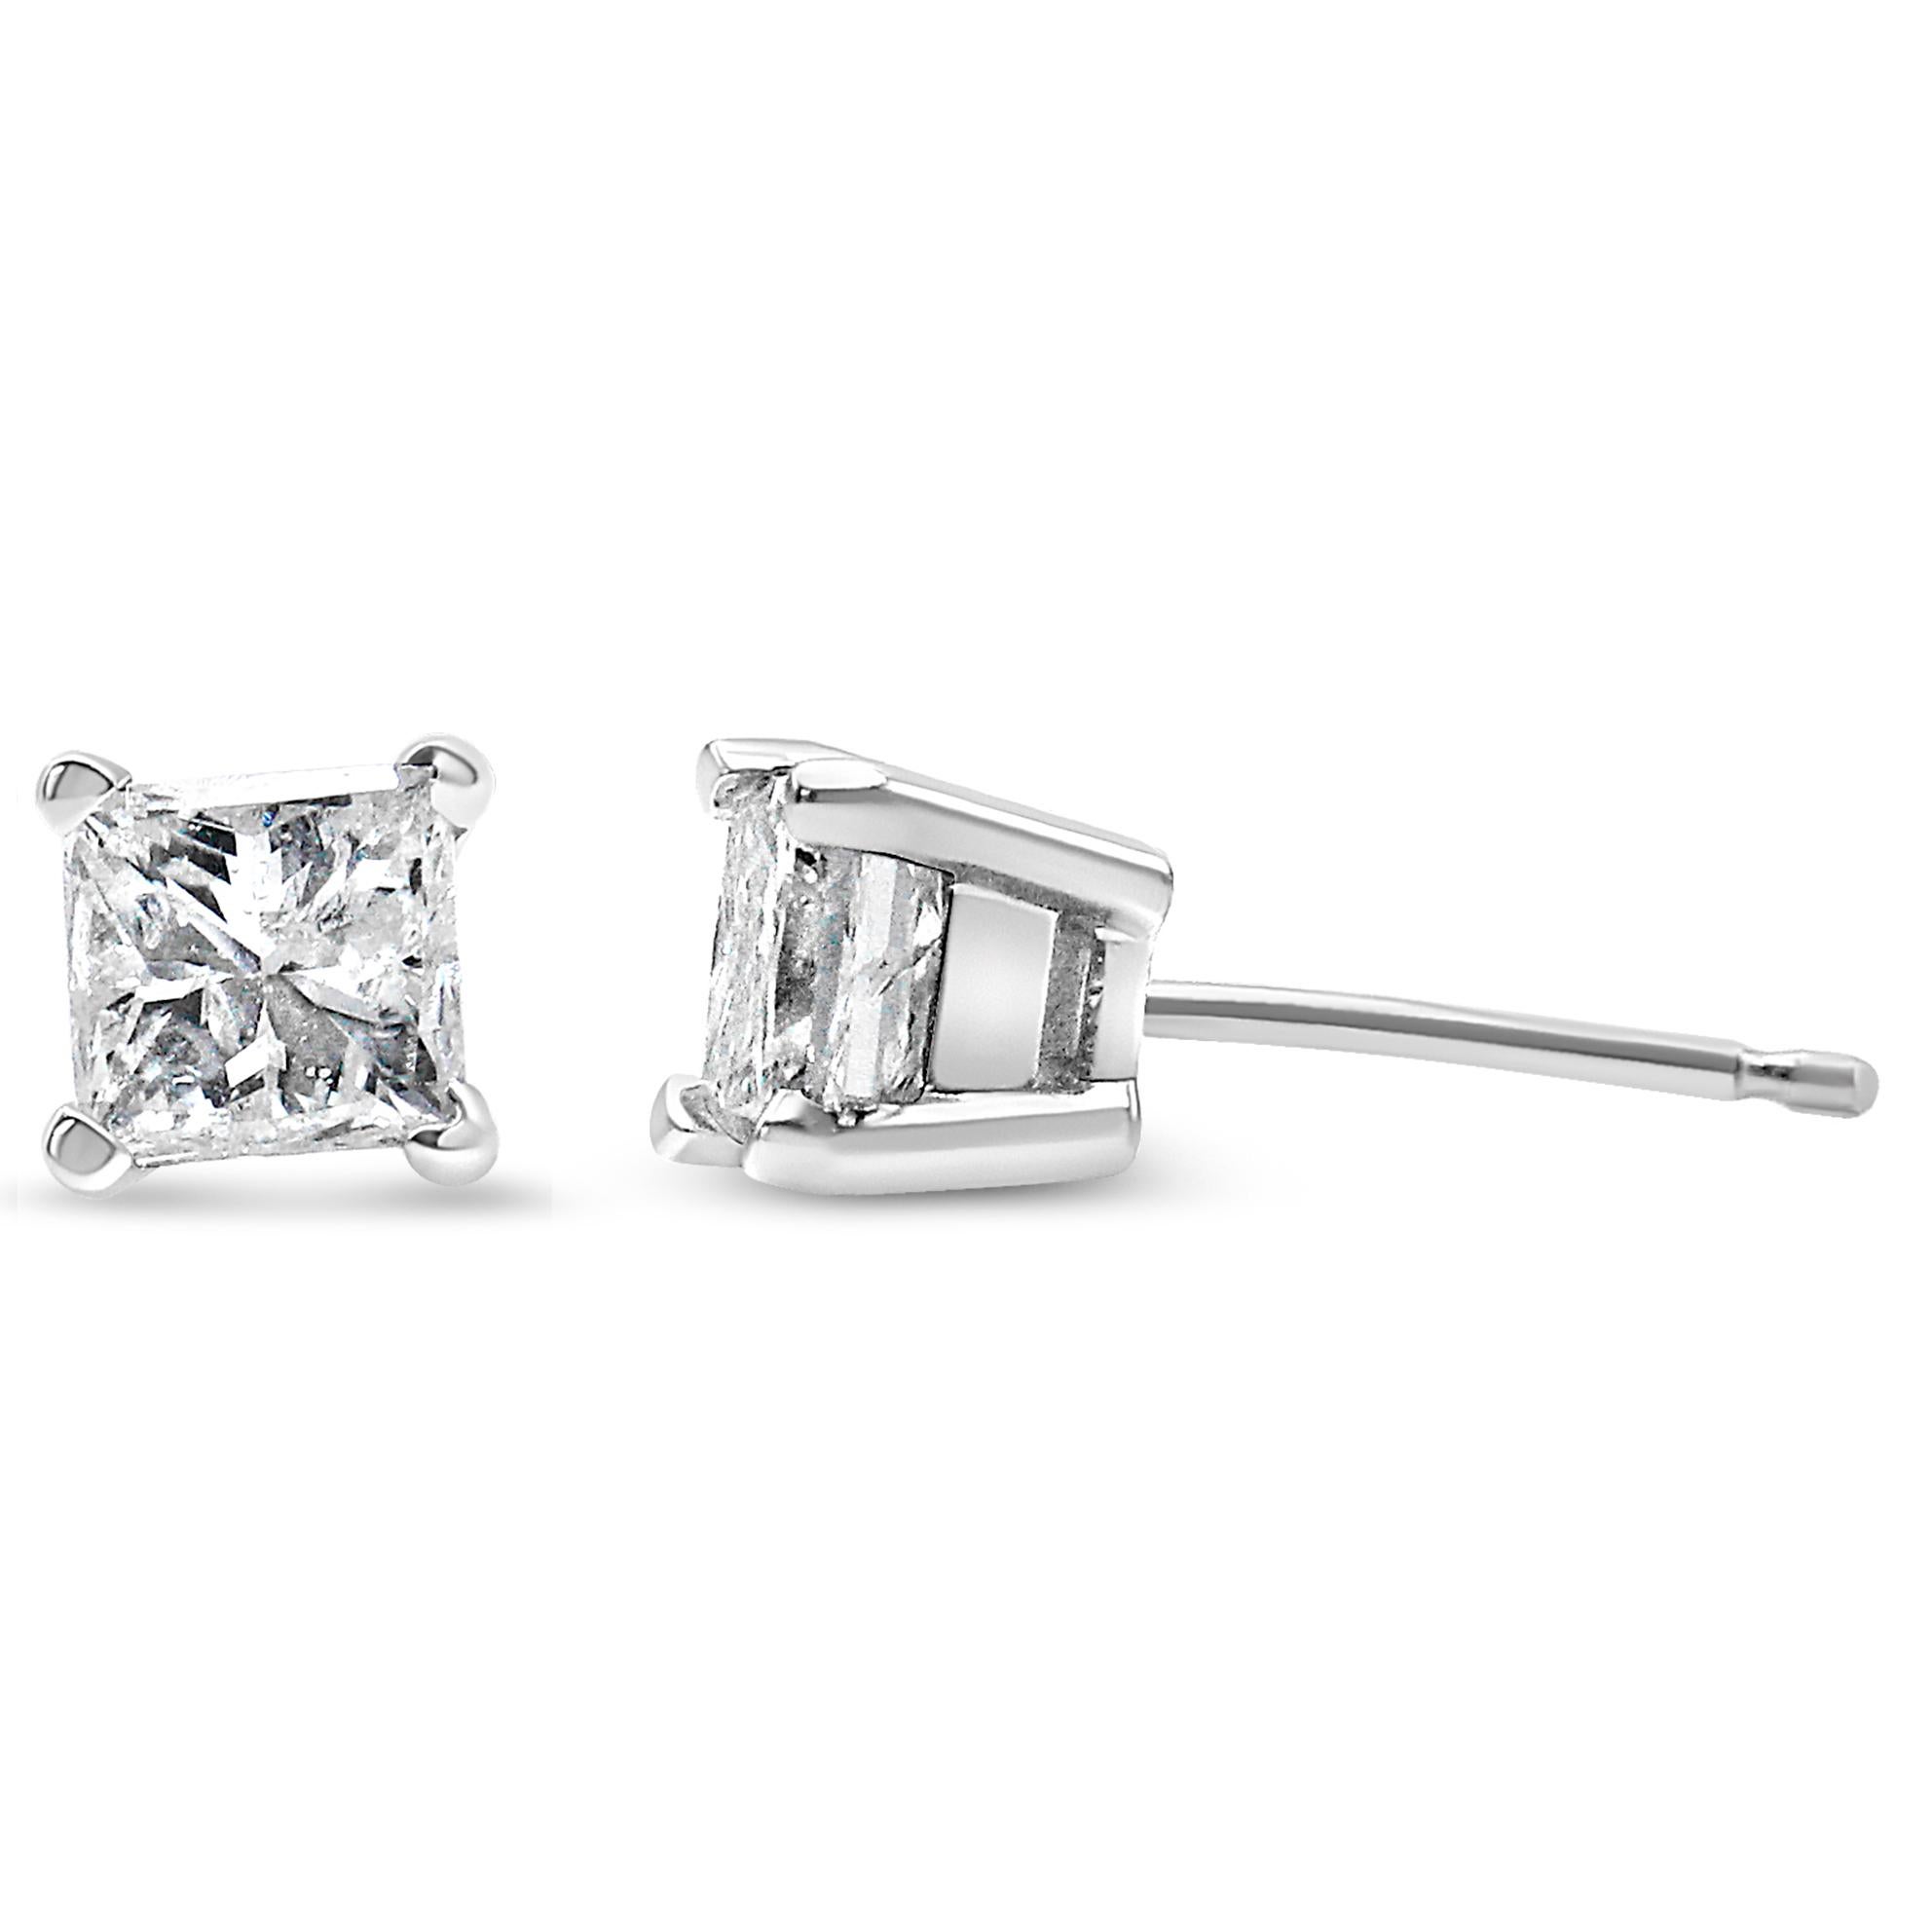 square diamond earrings 1 carat